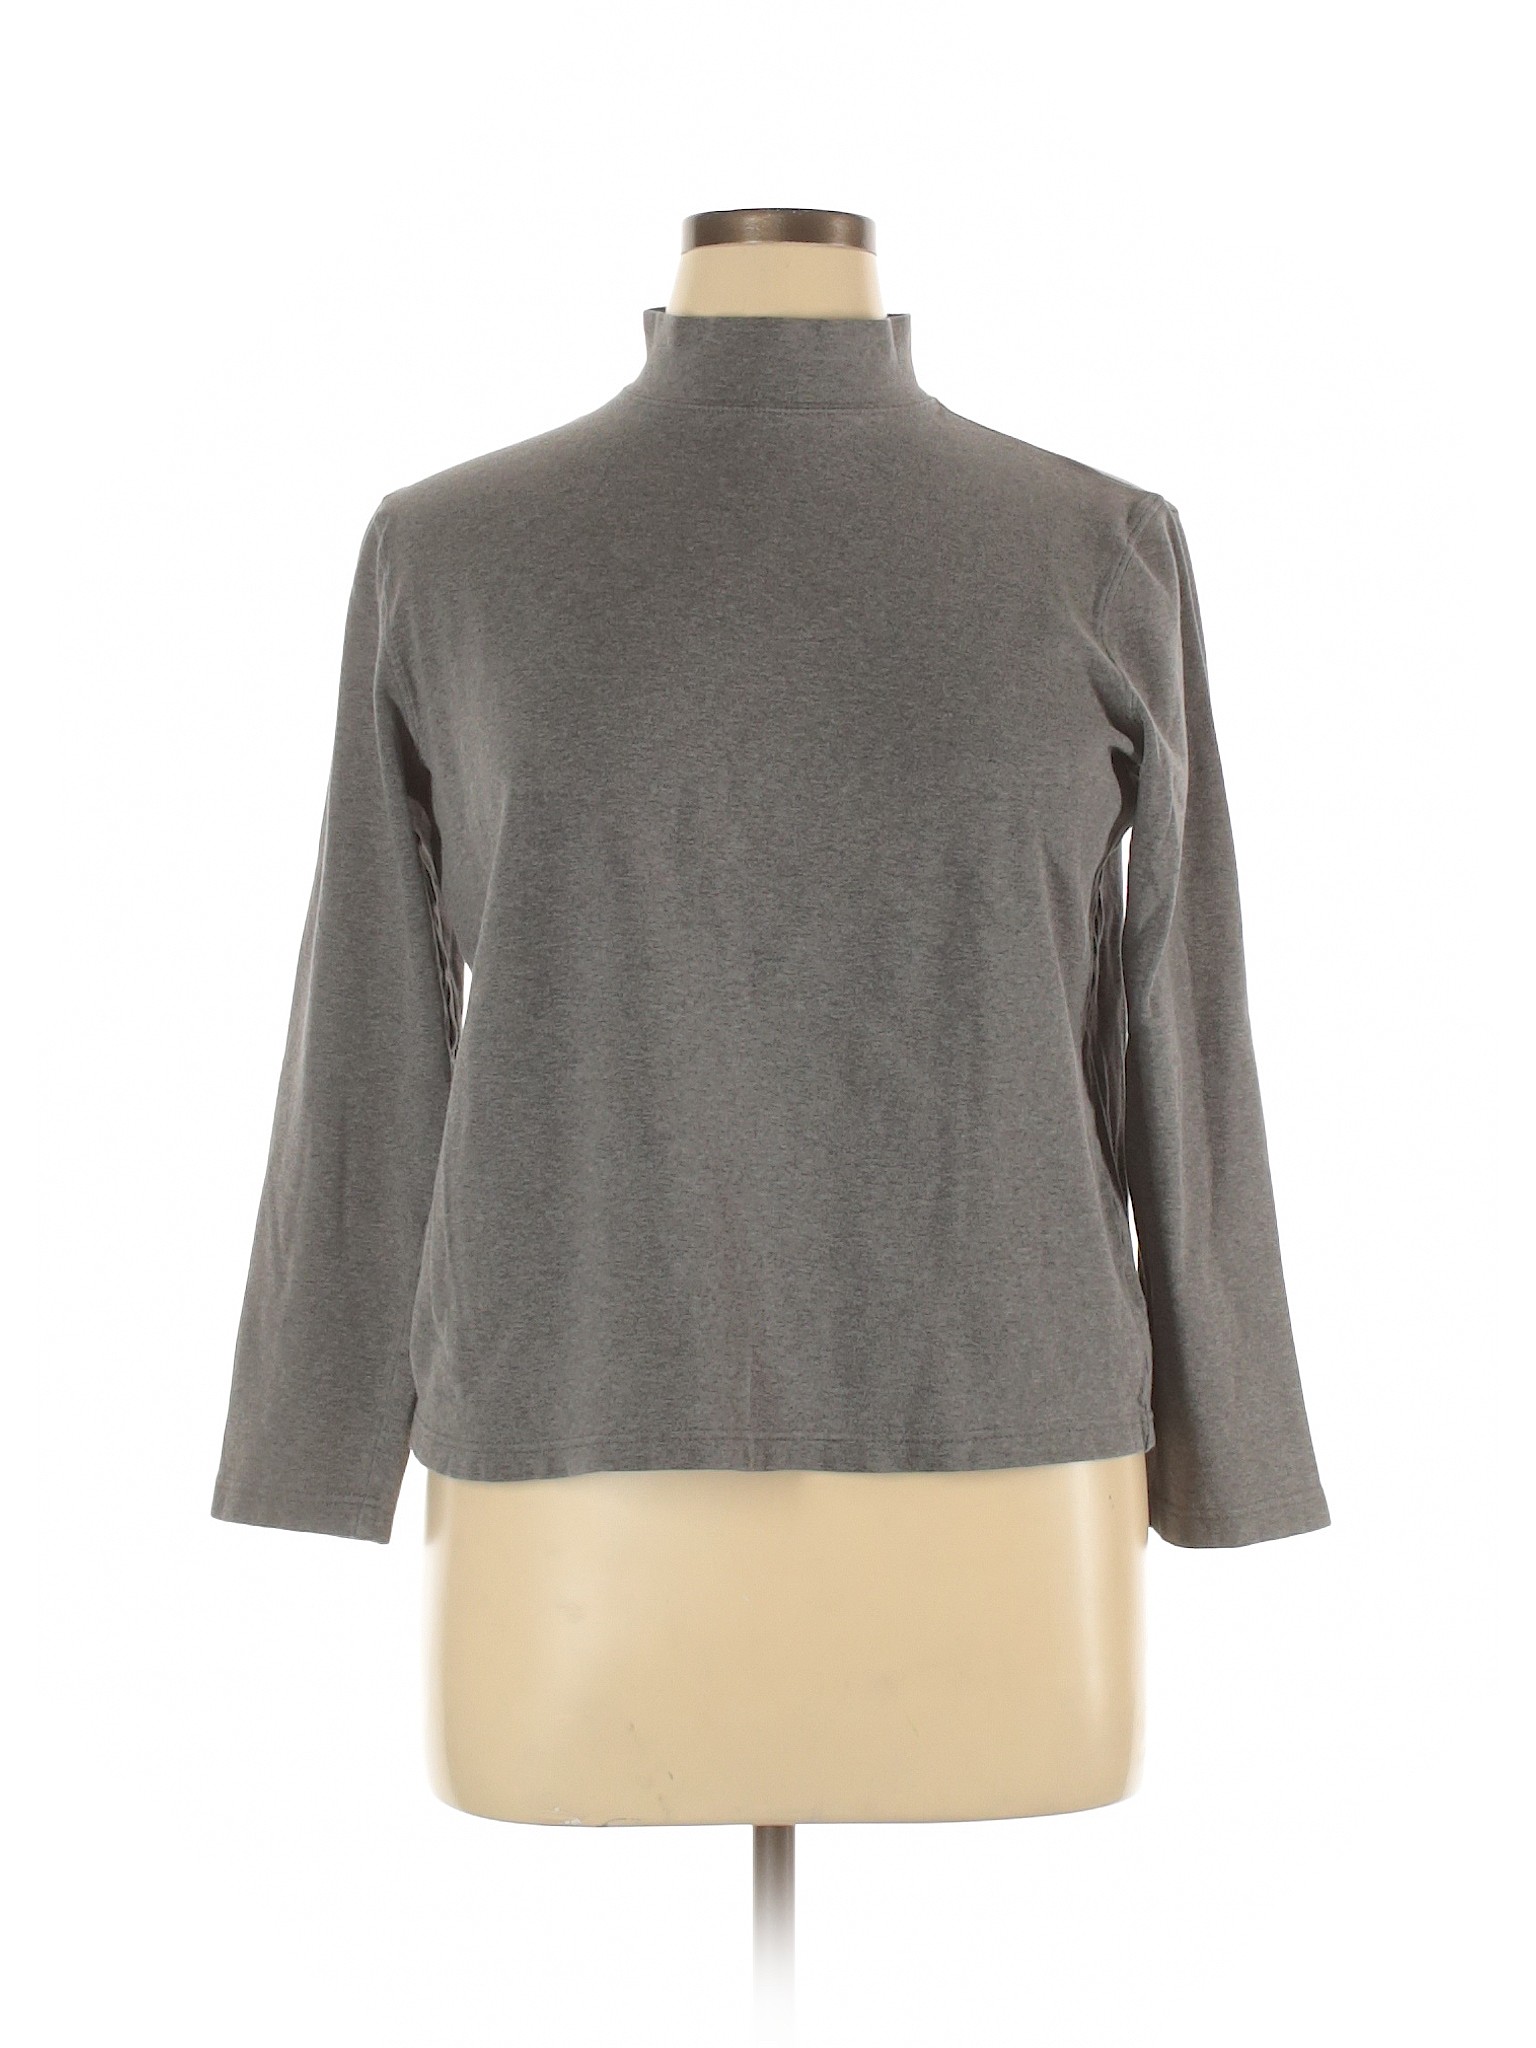 Croft & Barrow Women Gray Pullover Sweater XL | eBay